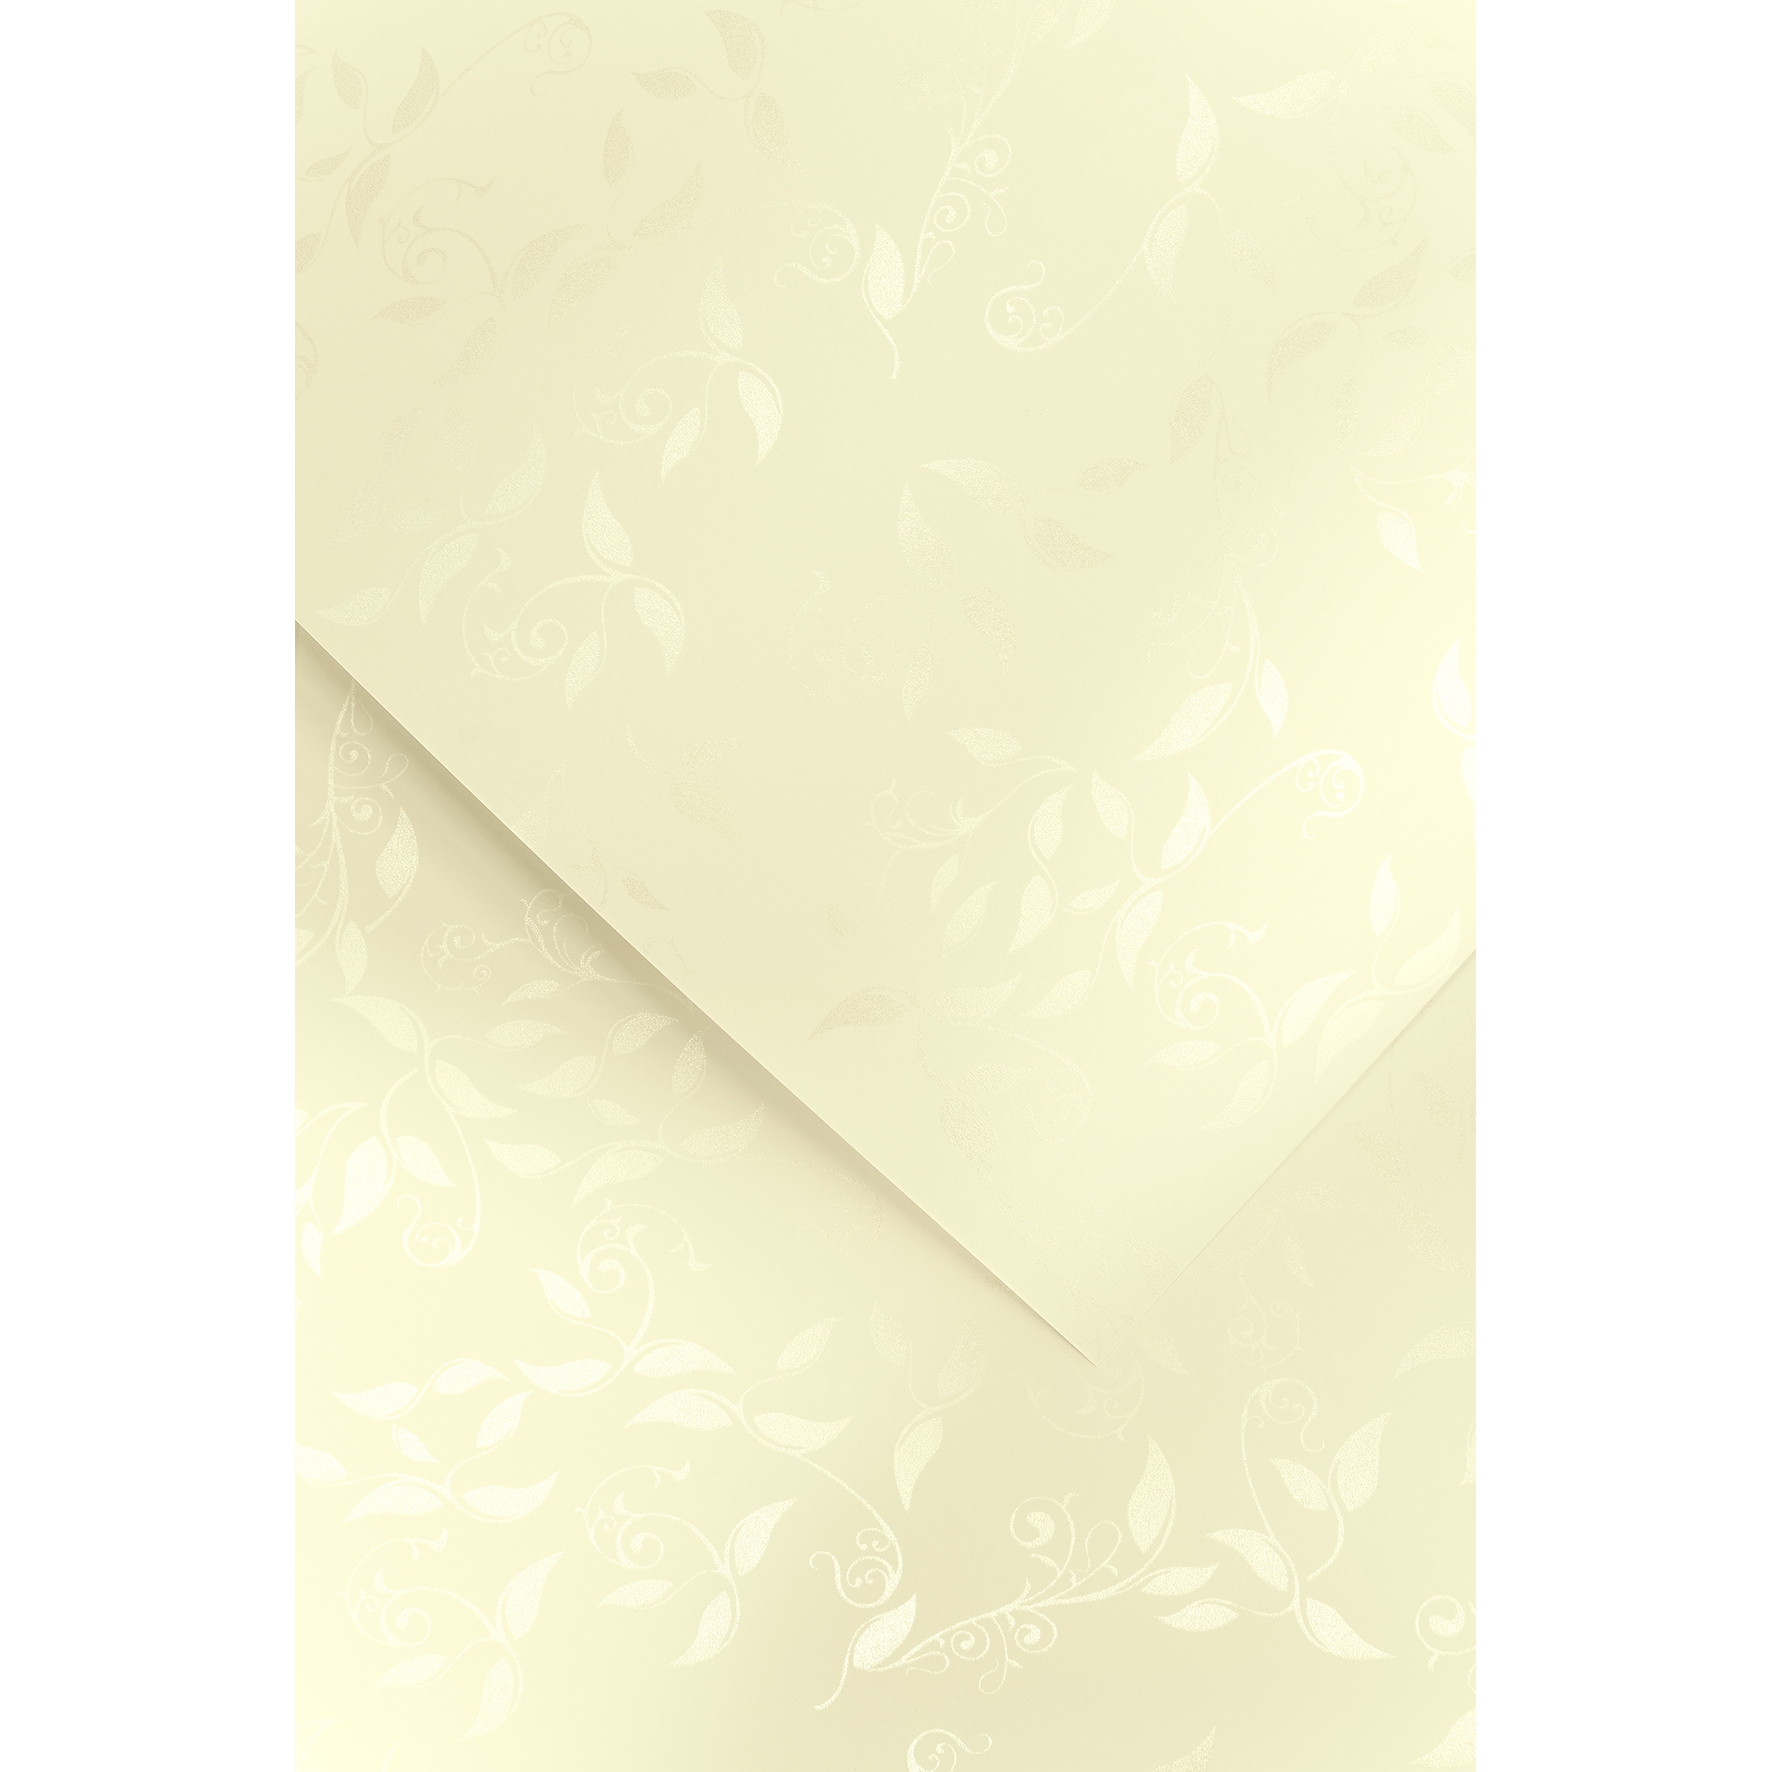 Ozdobný papír Liana, ivory, 230g, 20ks